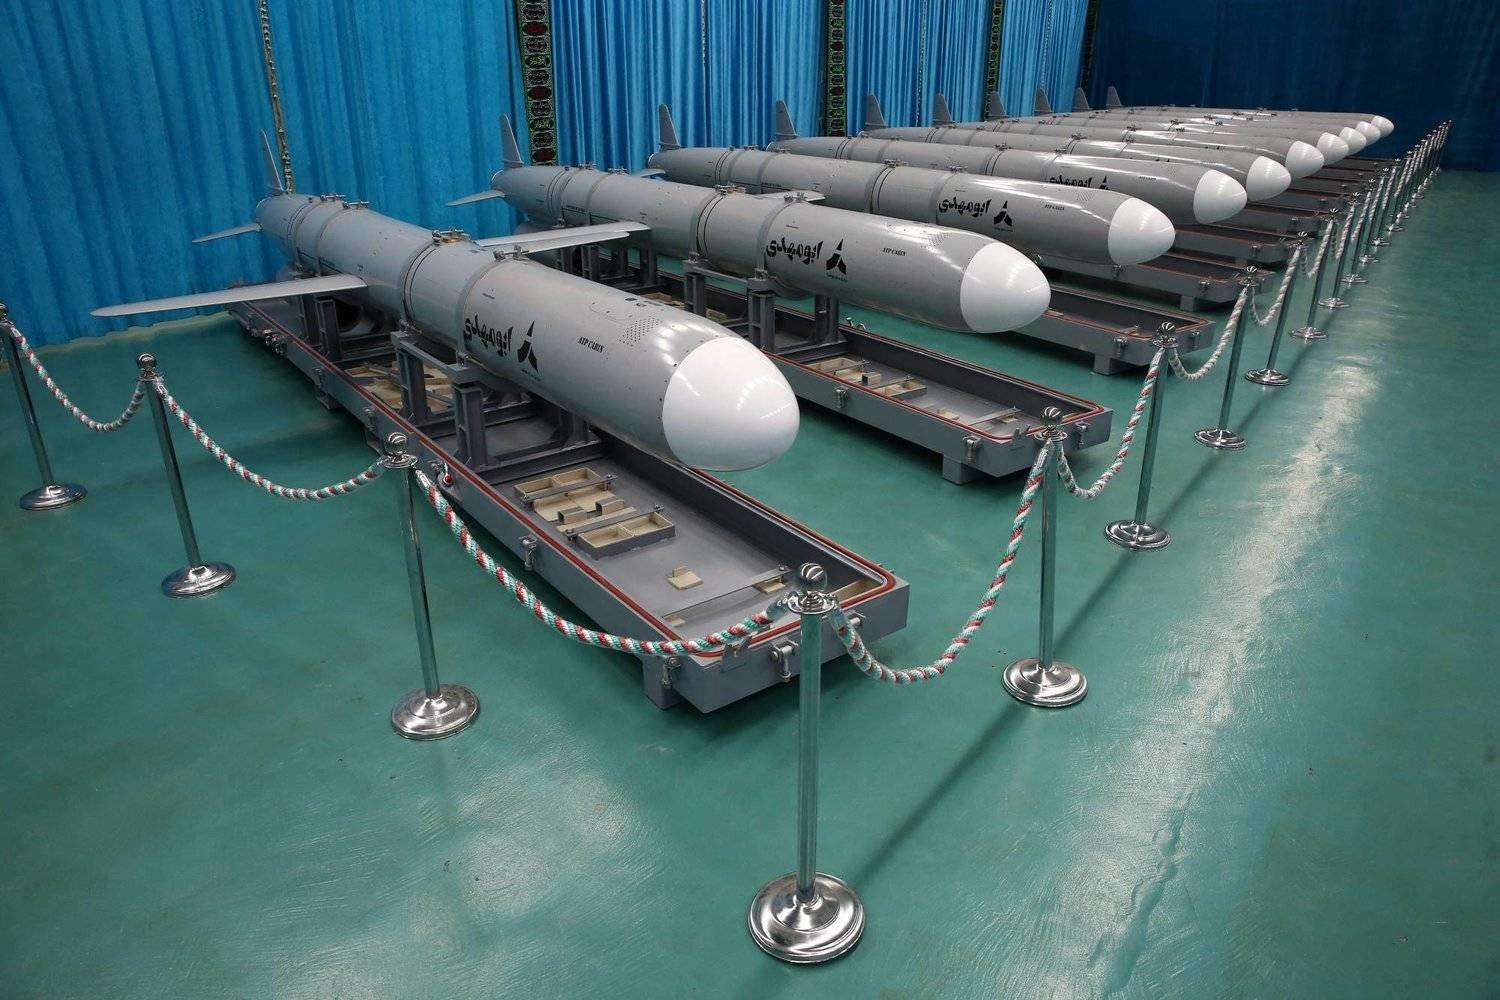 Abu Mahdi missiles courtesy of Iran